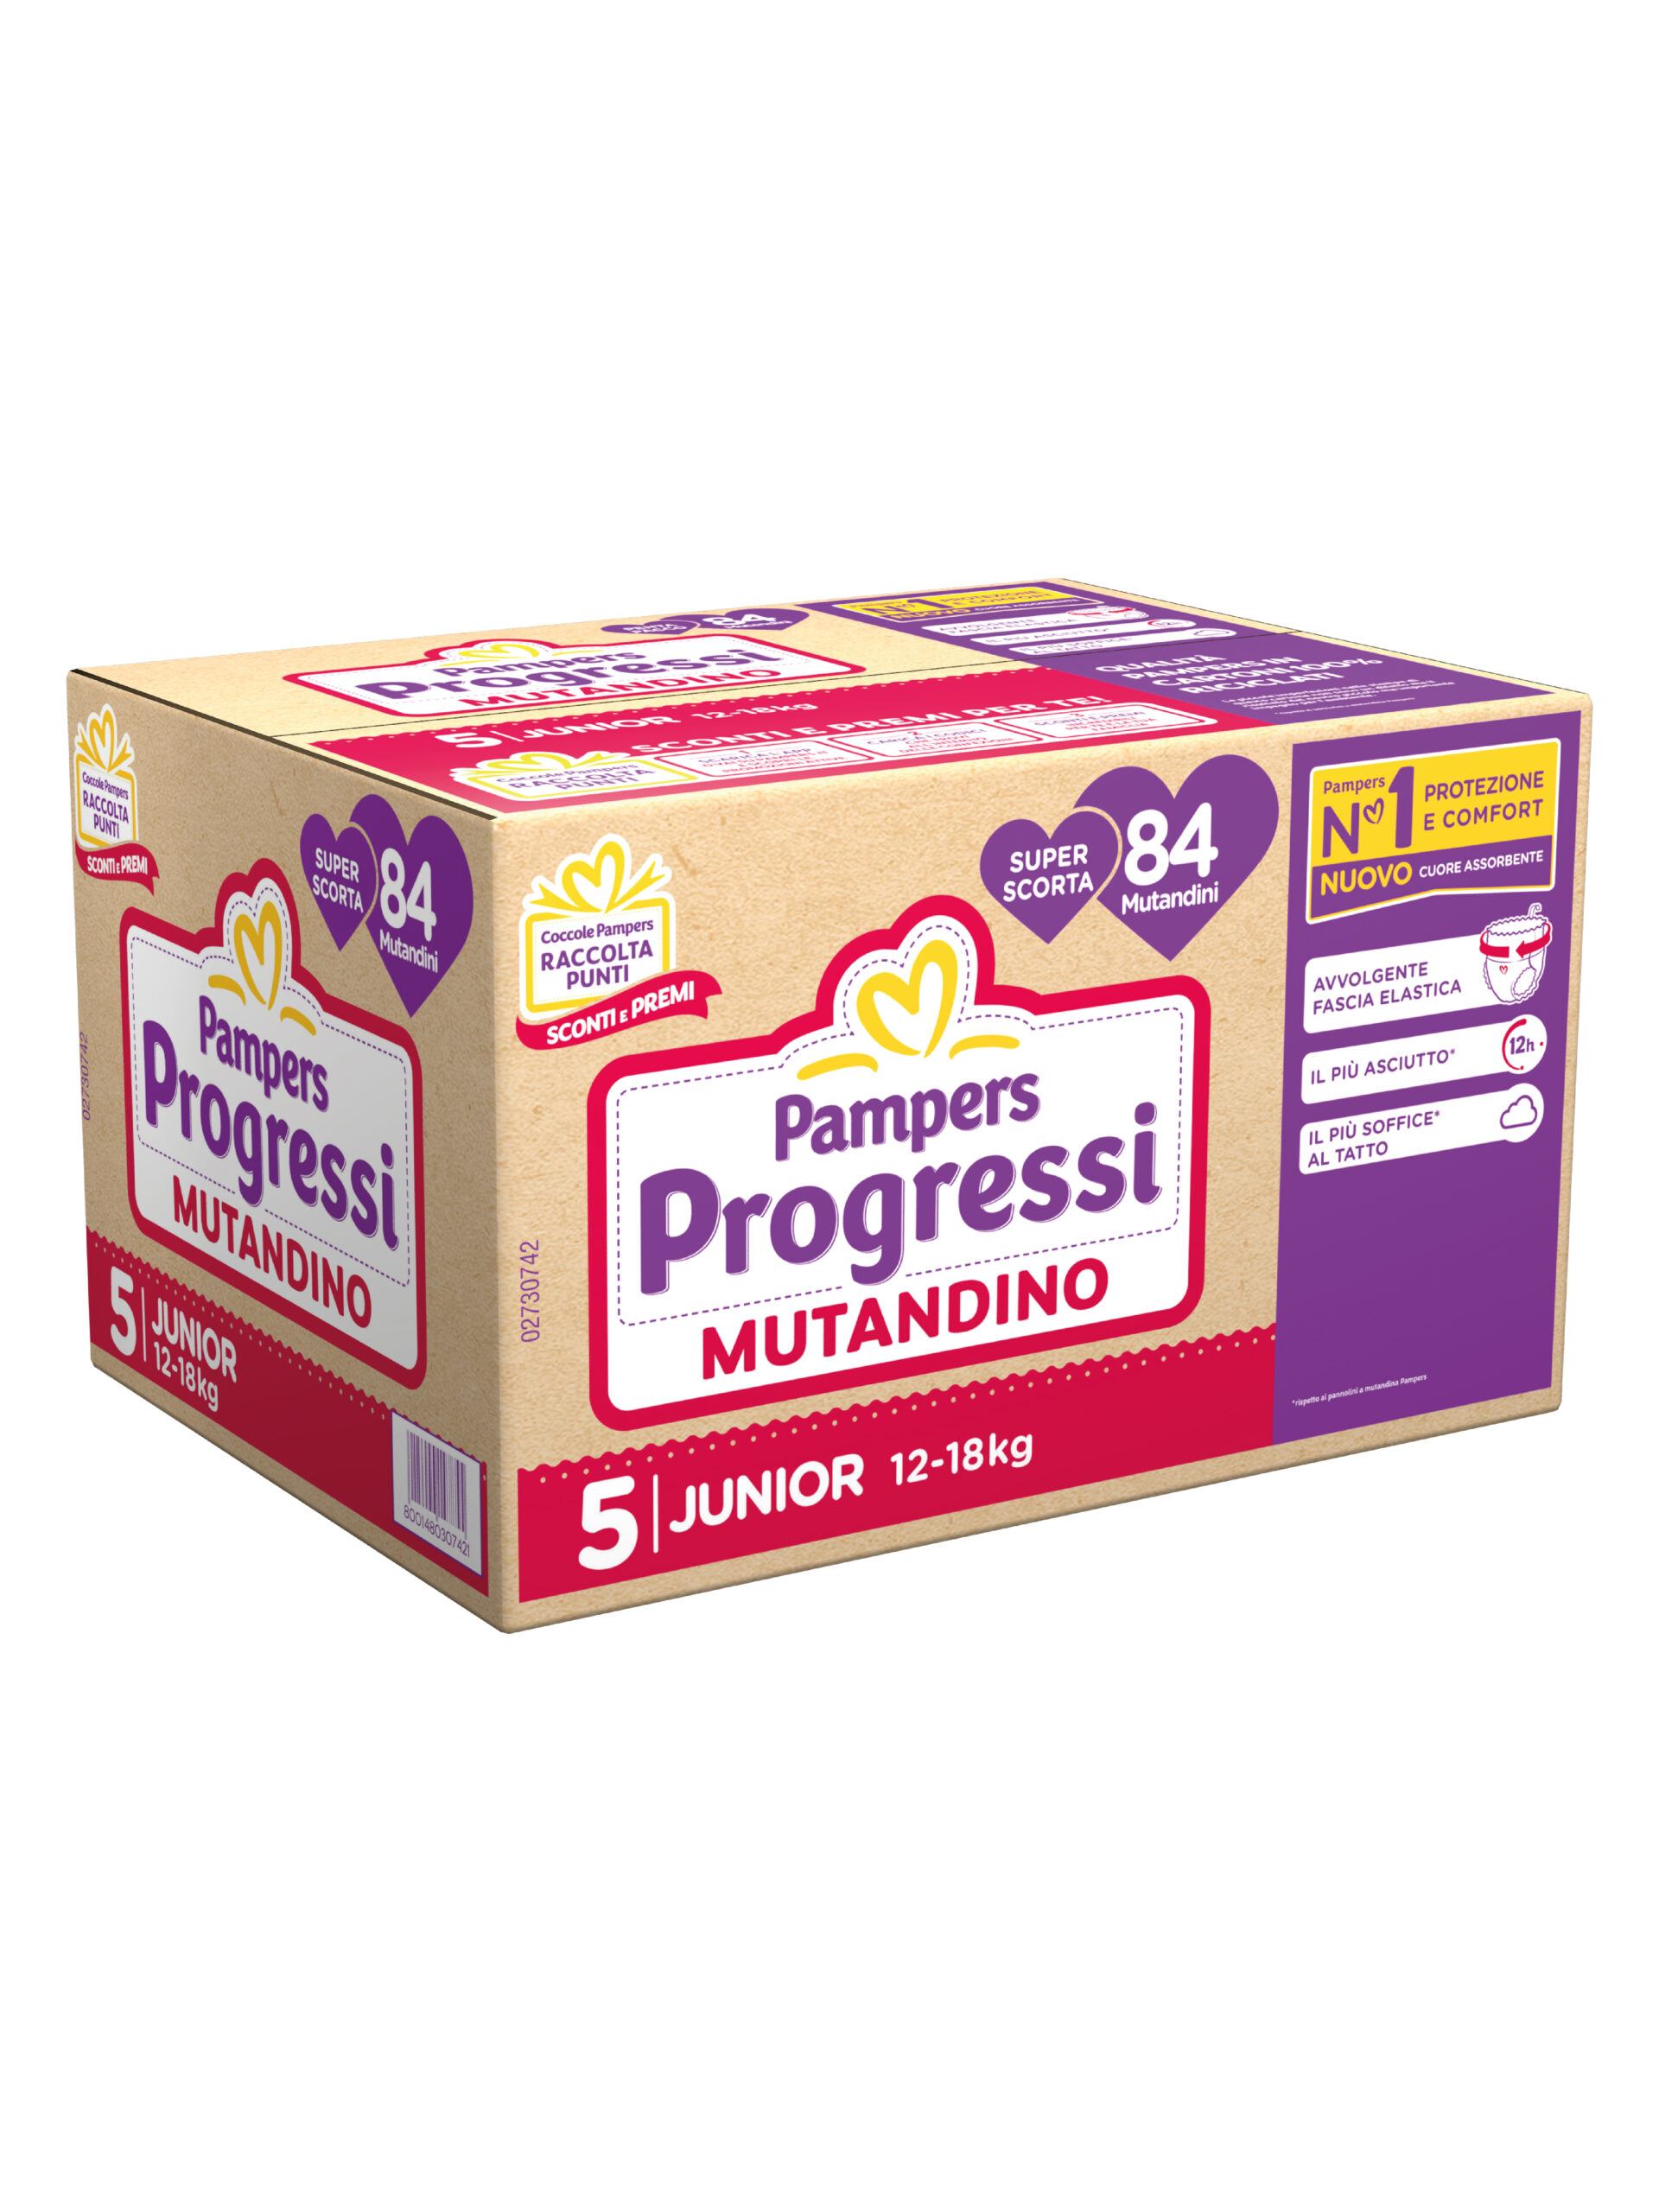 Pampers progressi mutandino junior taglia 5 pacco scorta x84 - Pampers